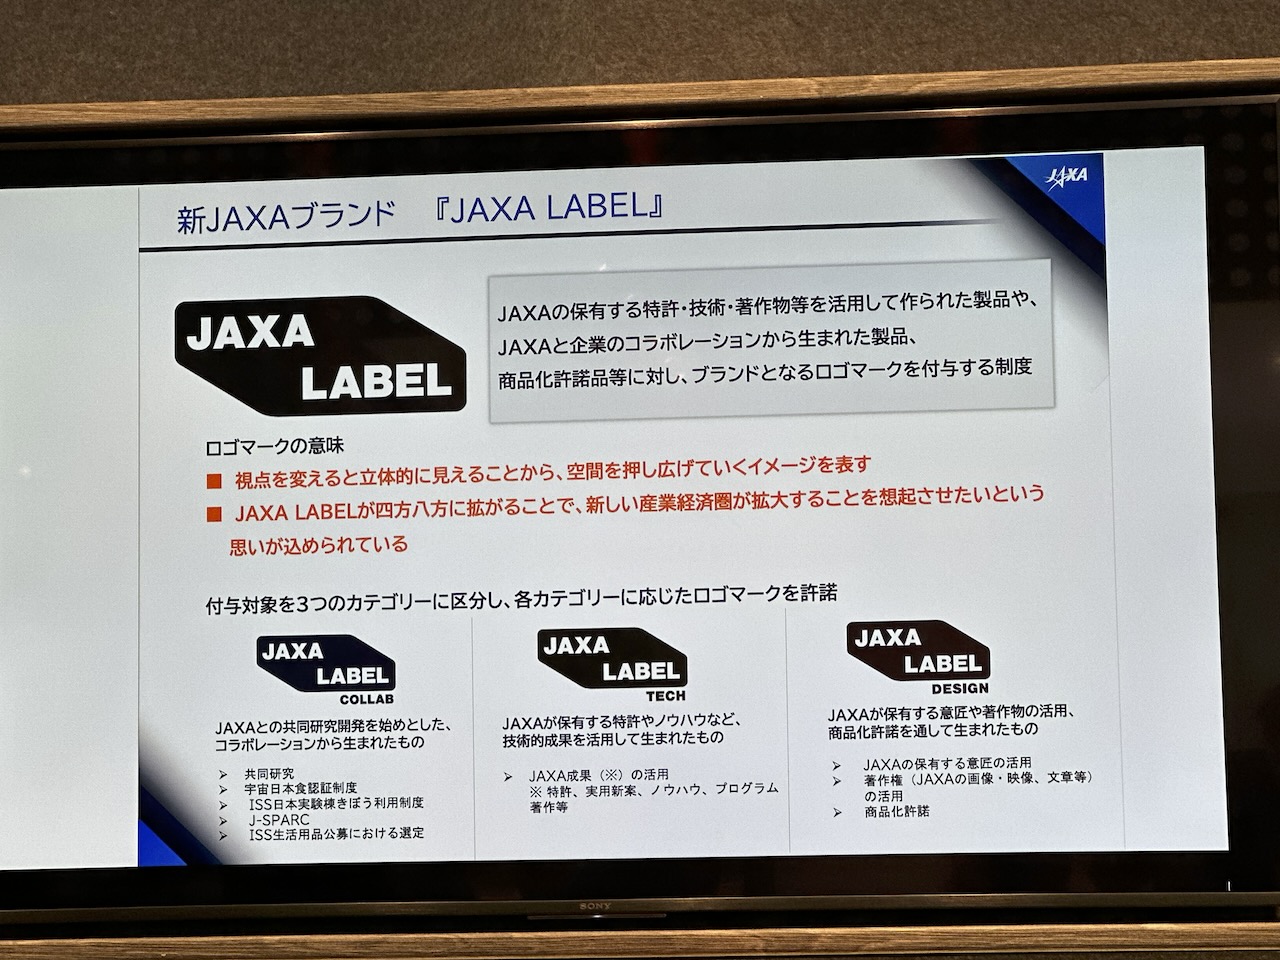 JAXAと企業のコラボ製品には「JAXA LABEL」が付与される